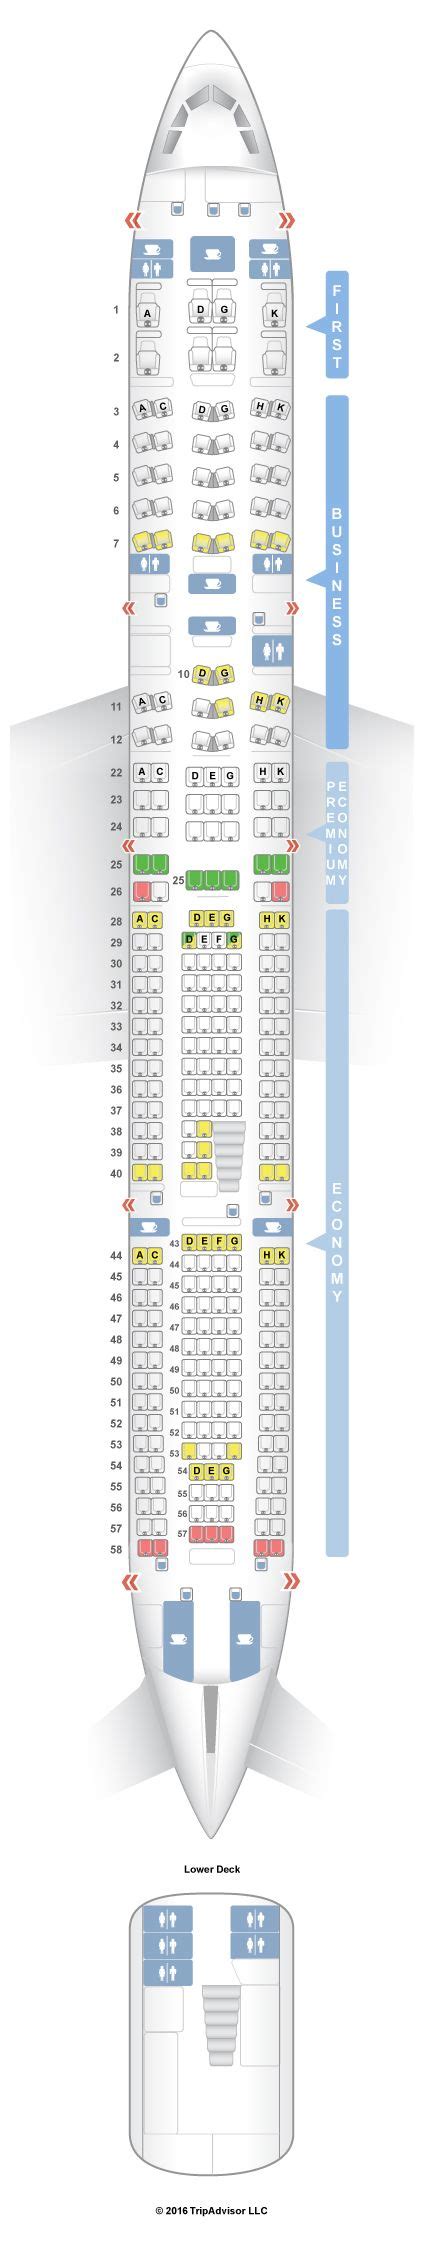 Munich Jfk Seatguru Seat Map Lufthansa Airbus A340 600 346 V1